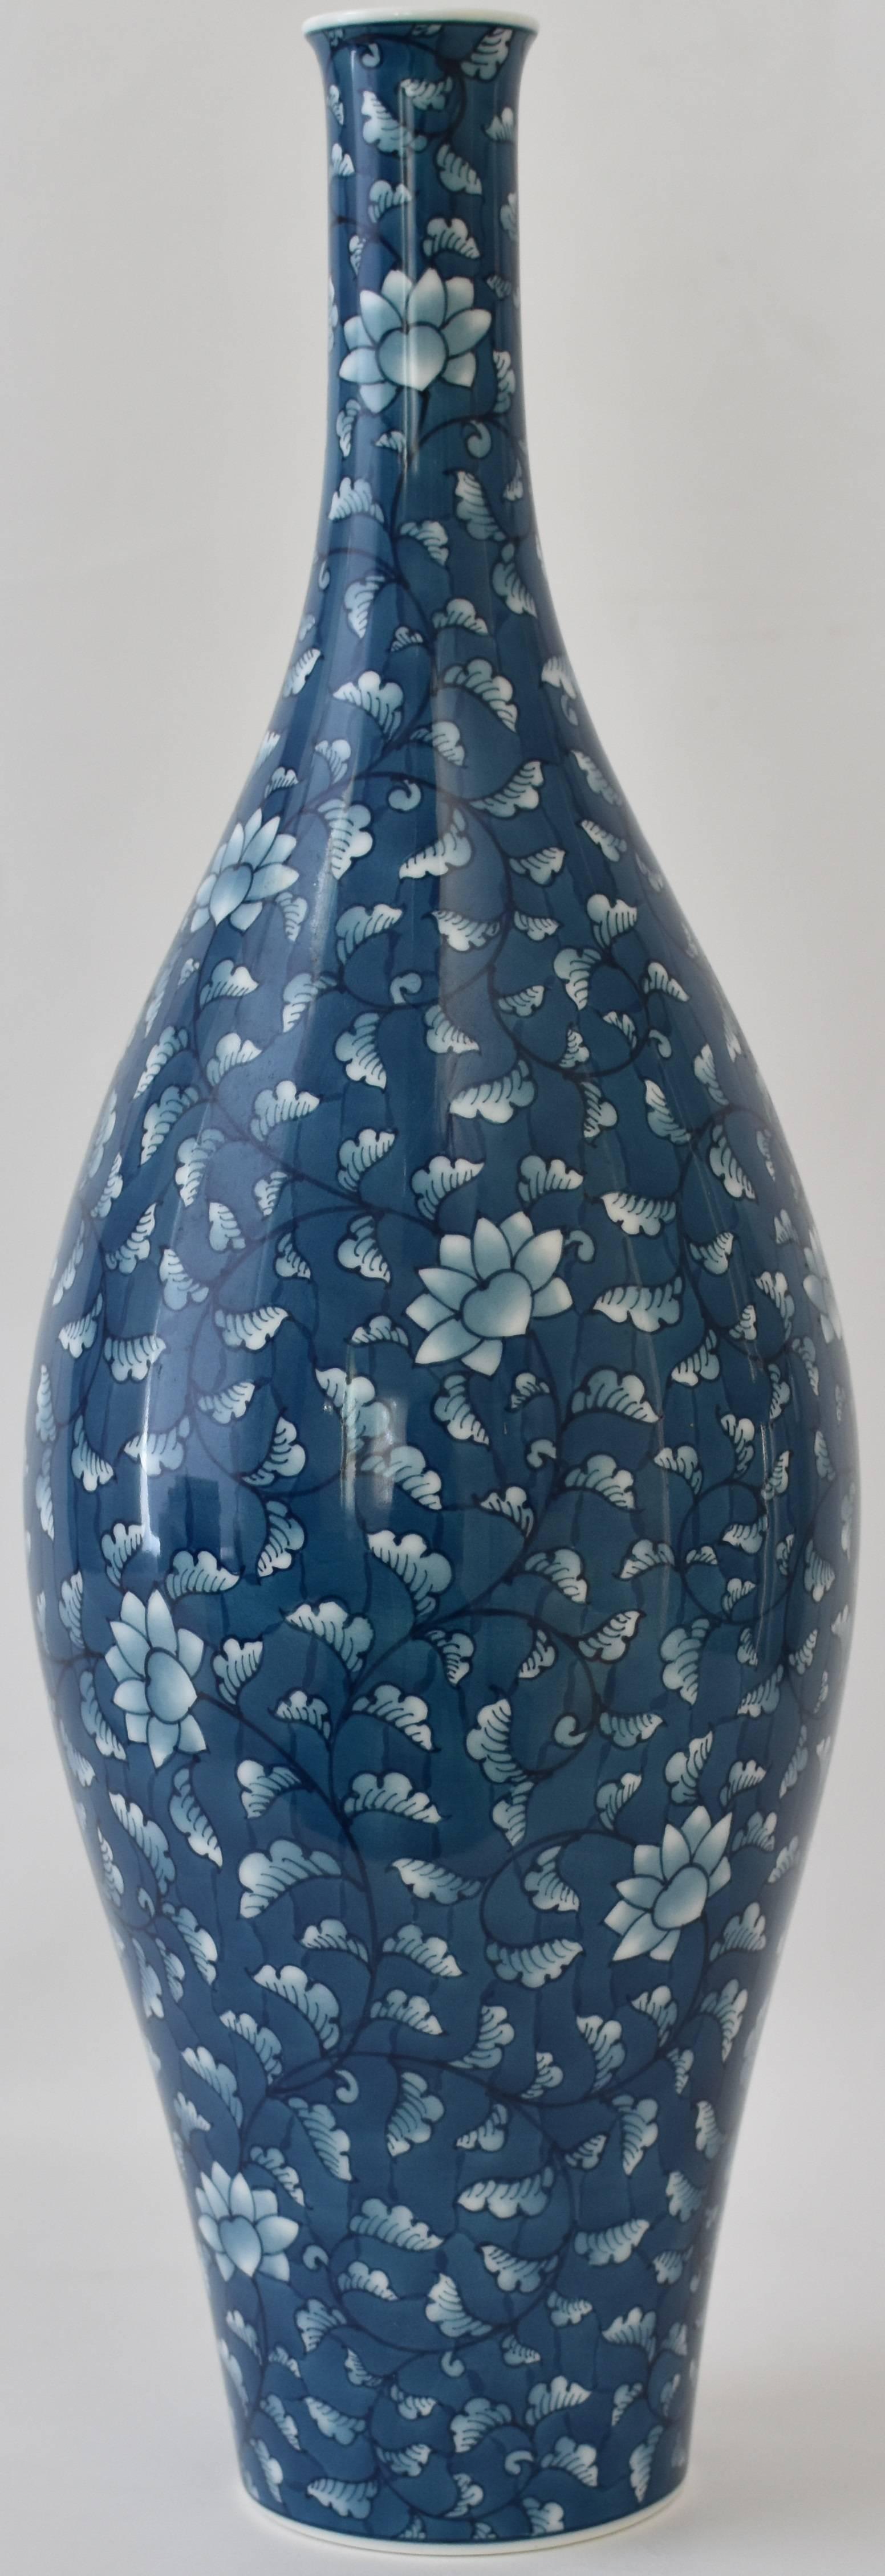 Large Japanese Imari Blue Hand-Painted Porcelain Vase by Master Artist 1